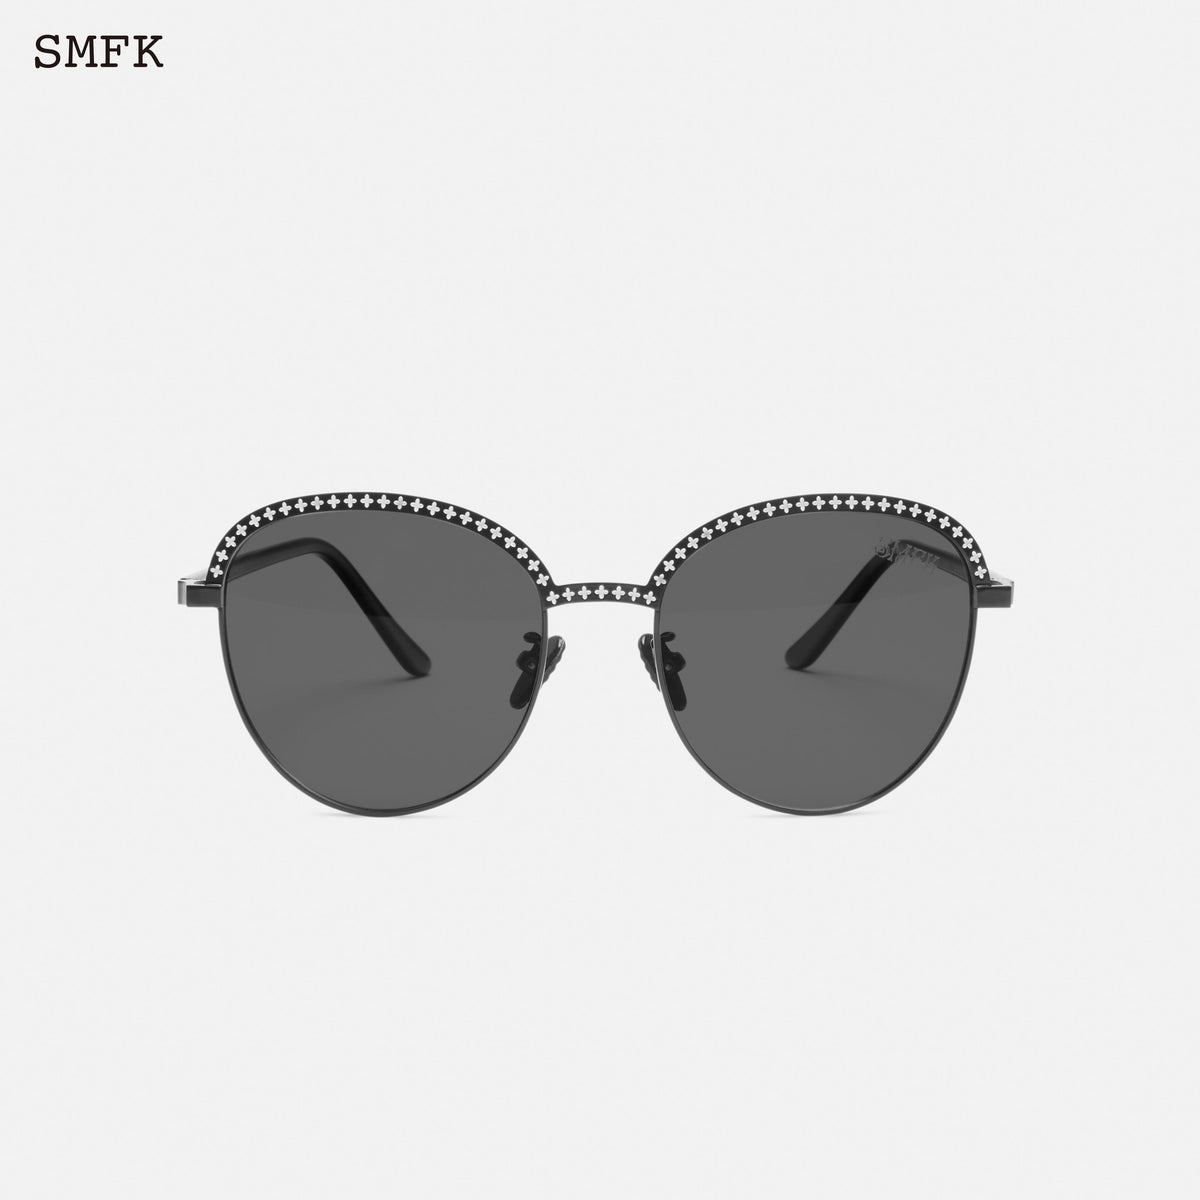 Chanel 4242 - Sunglasses